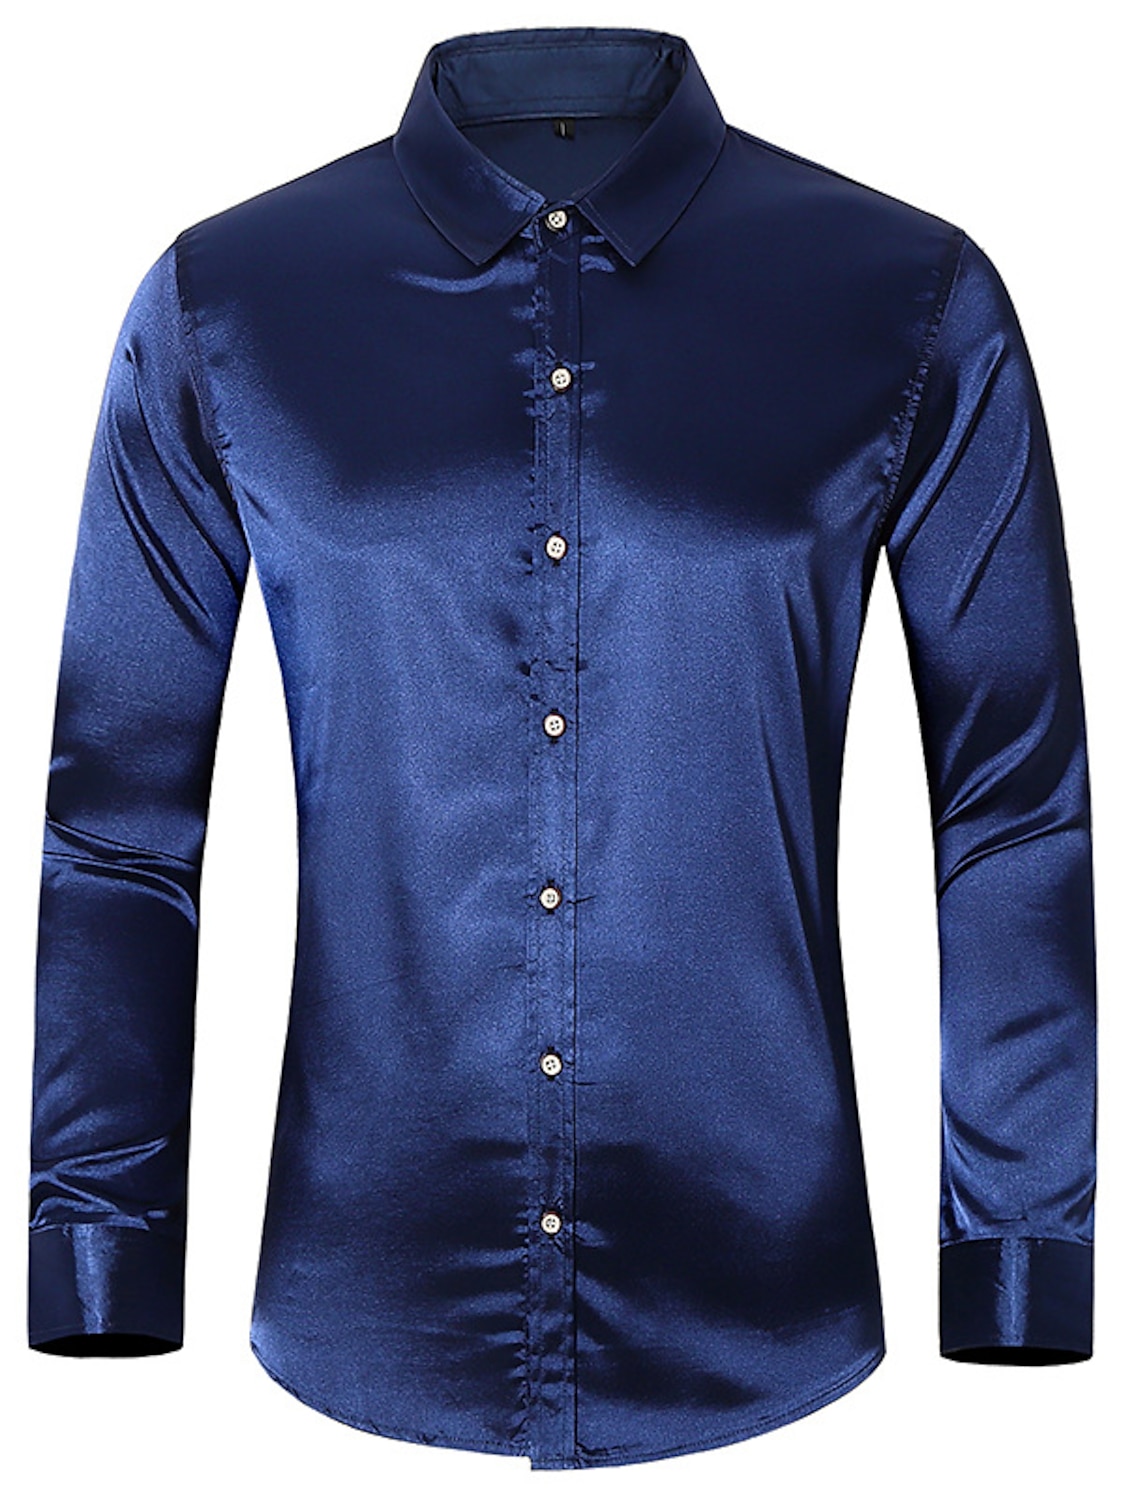 long sleeves shirt uzbek shirt blue shirt Men shirt with oriental ornaments cotton shirt casual shirt